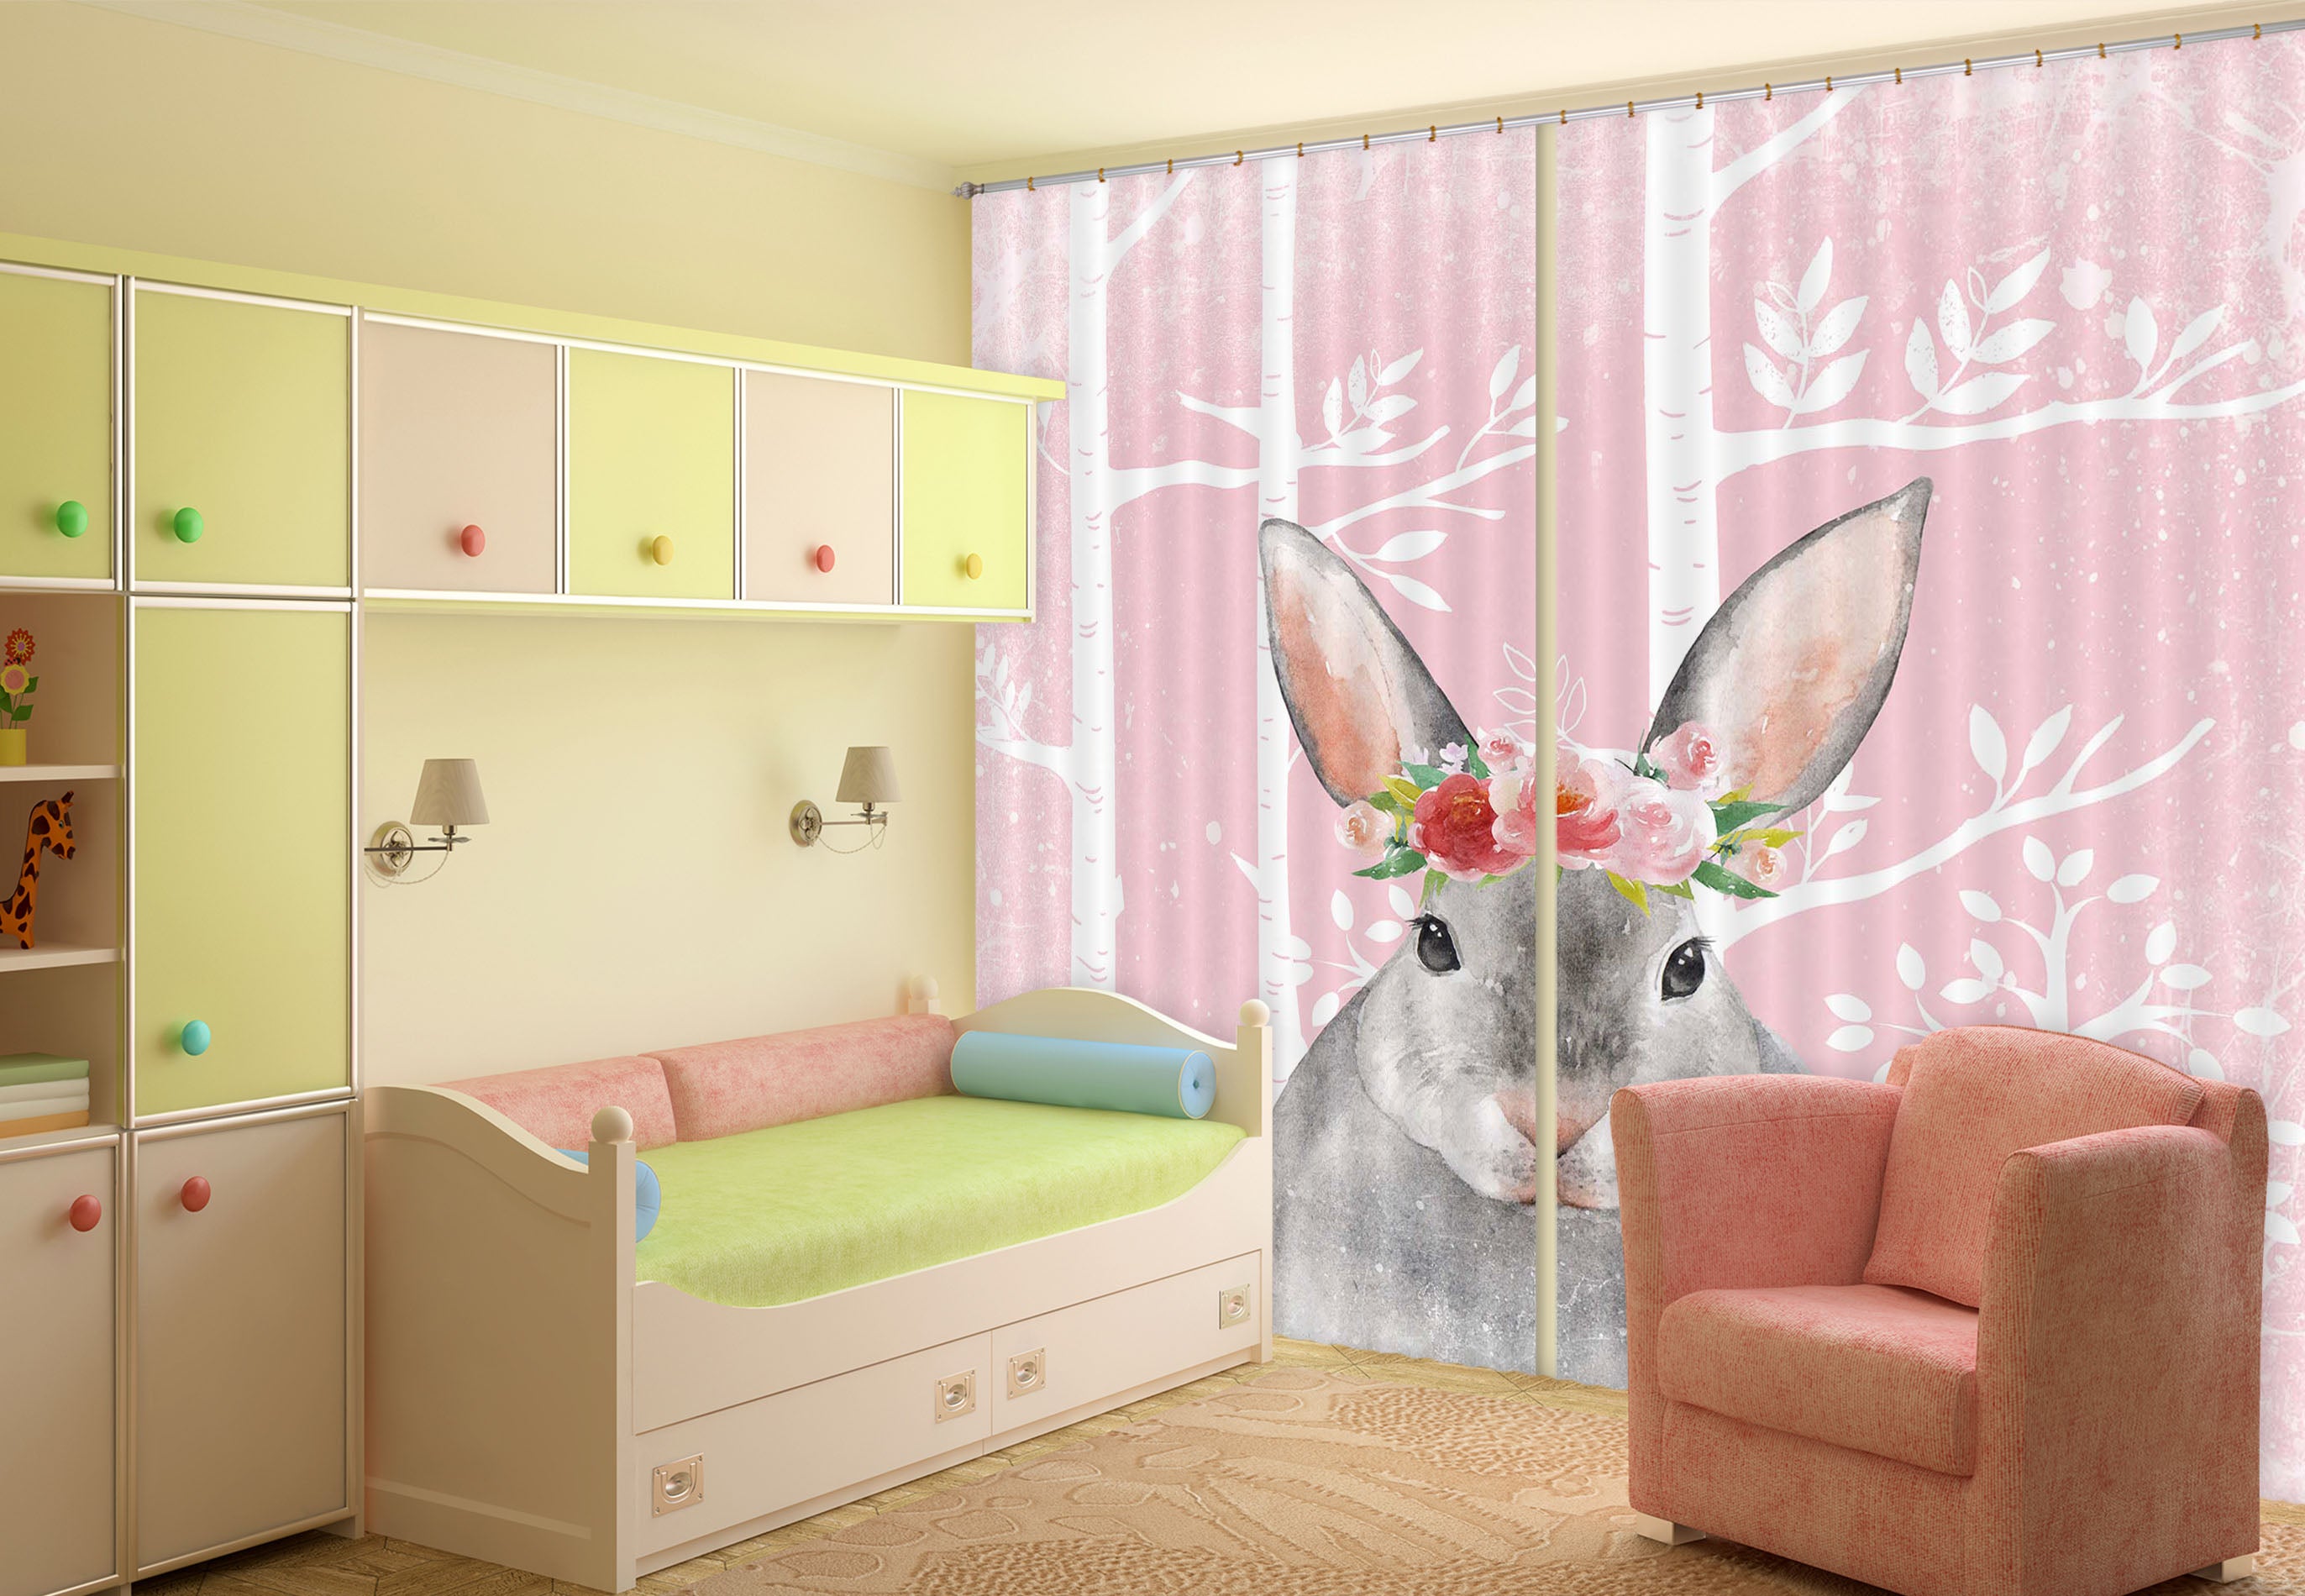 3D Gray Rabbit 173 Uta Naumann Curtain Curtains Drapes